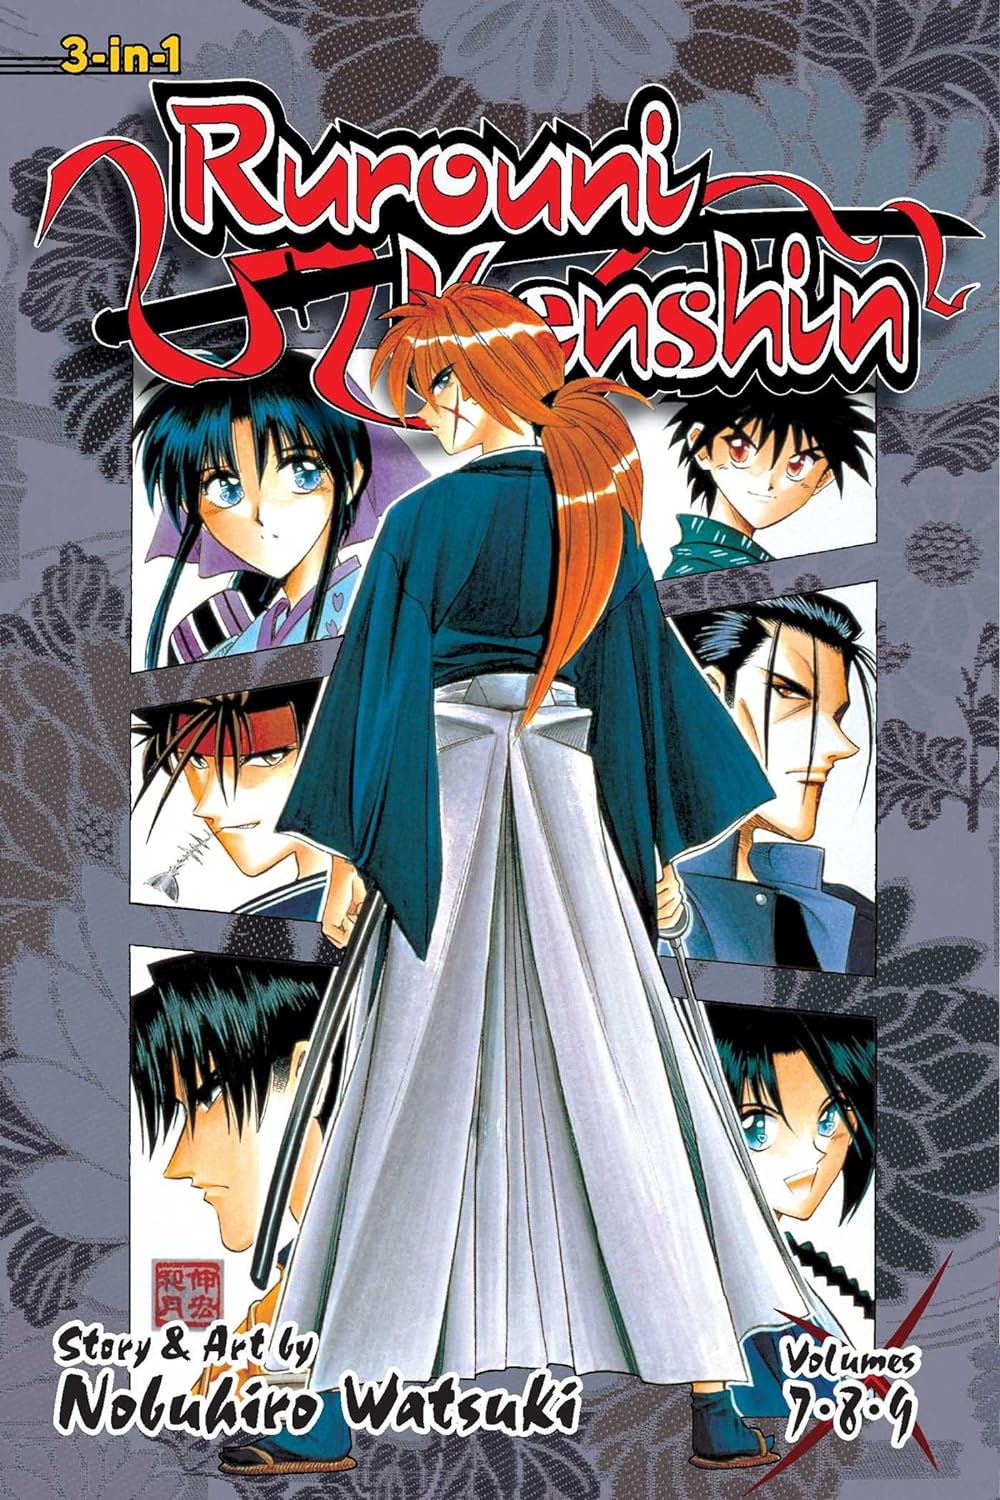 Rurouni Kenshin Volume 7-9 (3-in-1 Edition)